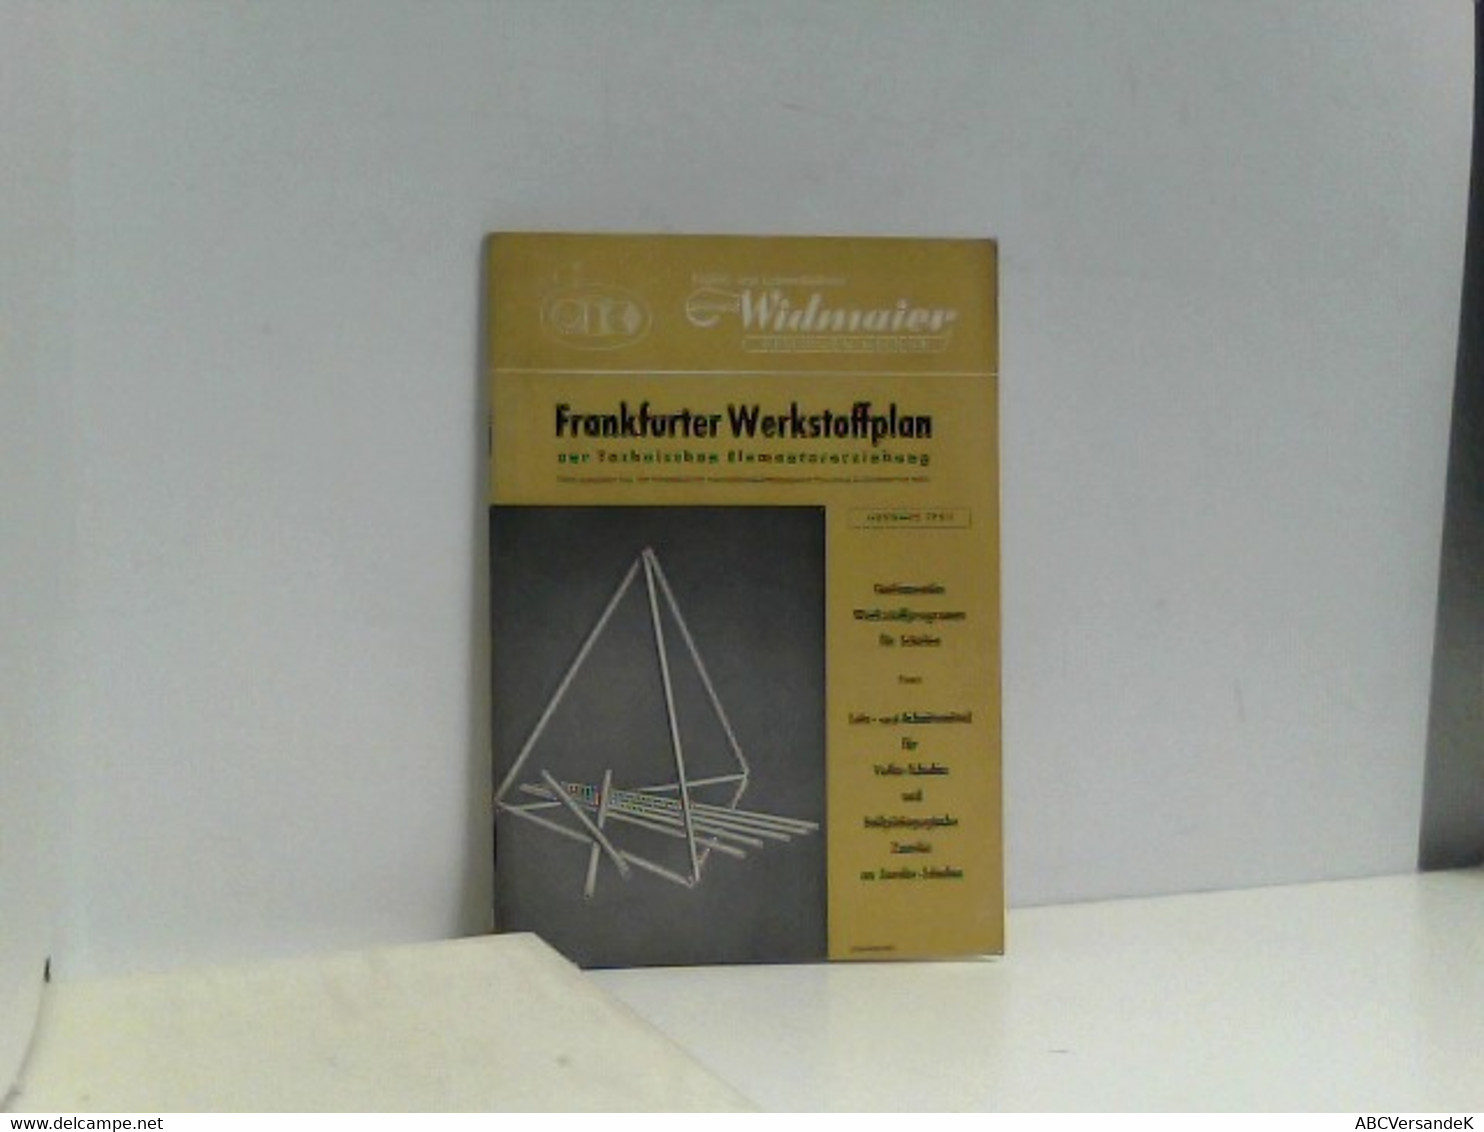 Frankfurter Werkstoffplan - Técnico